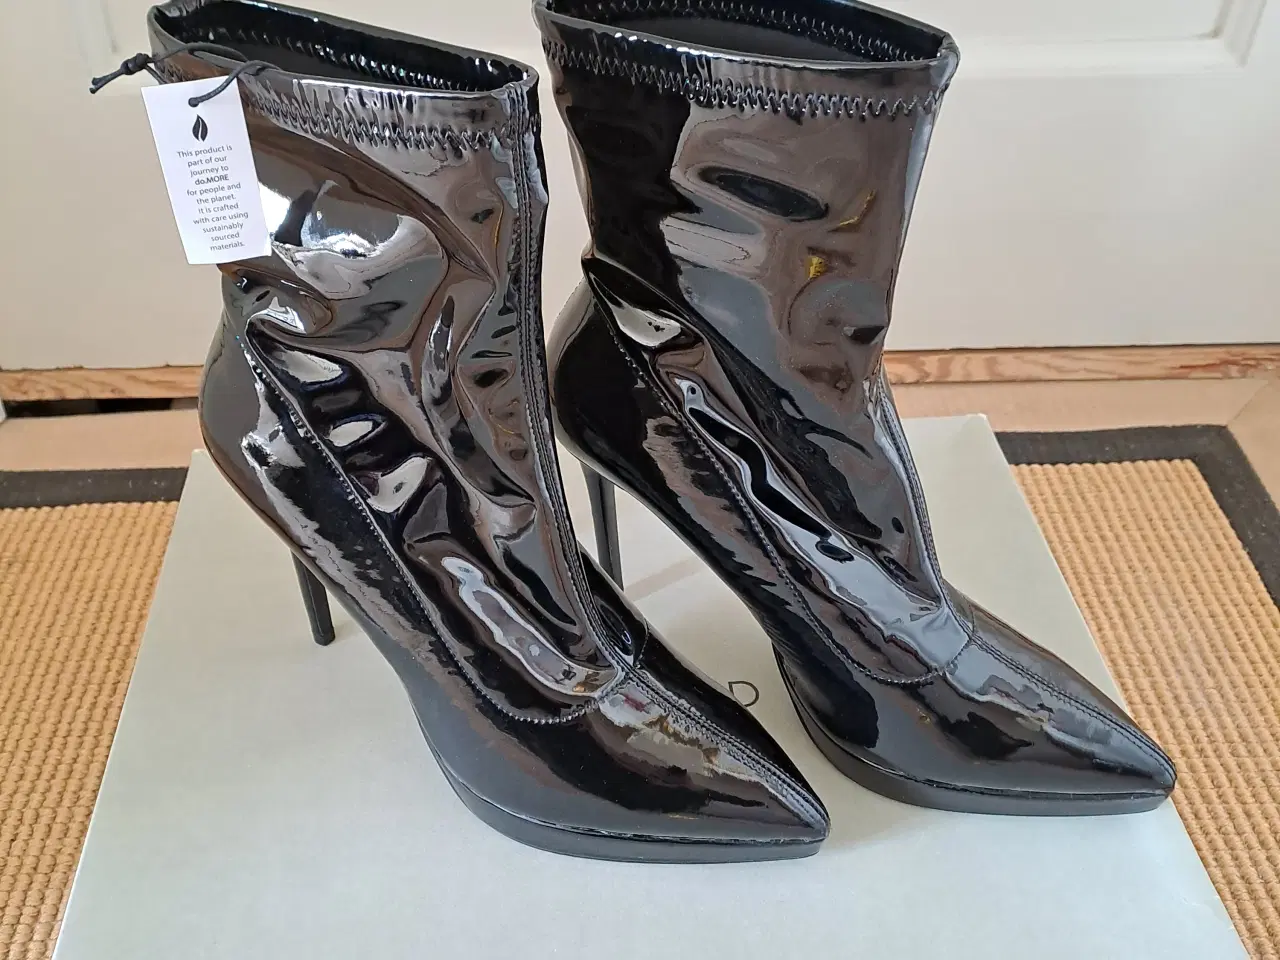 Billede 8 - Nye spejlblanke sorte lak støvler.